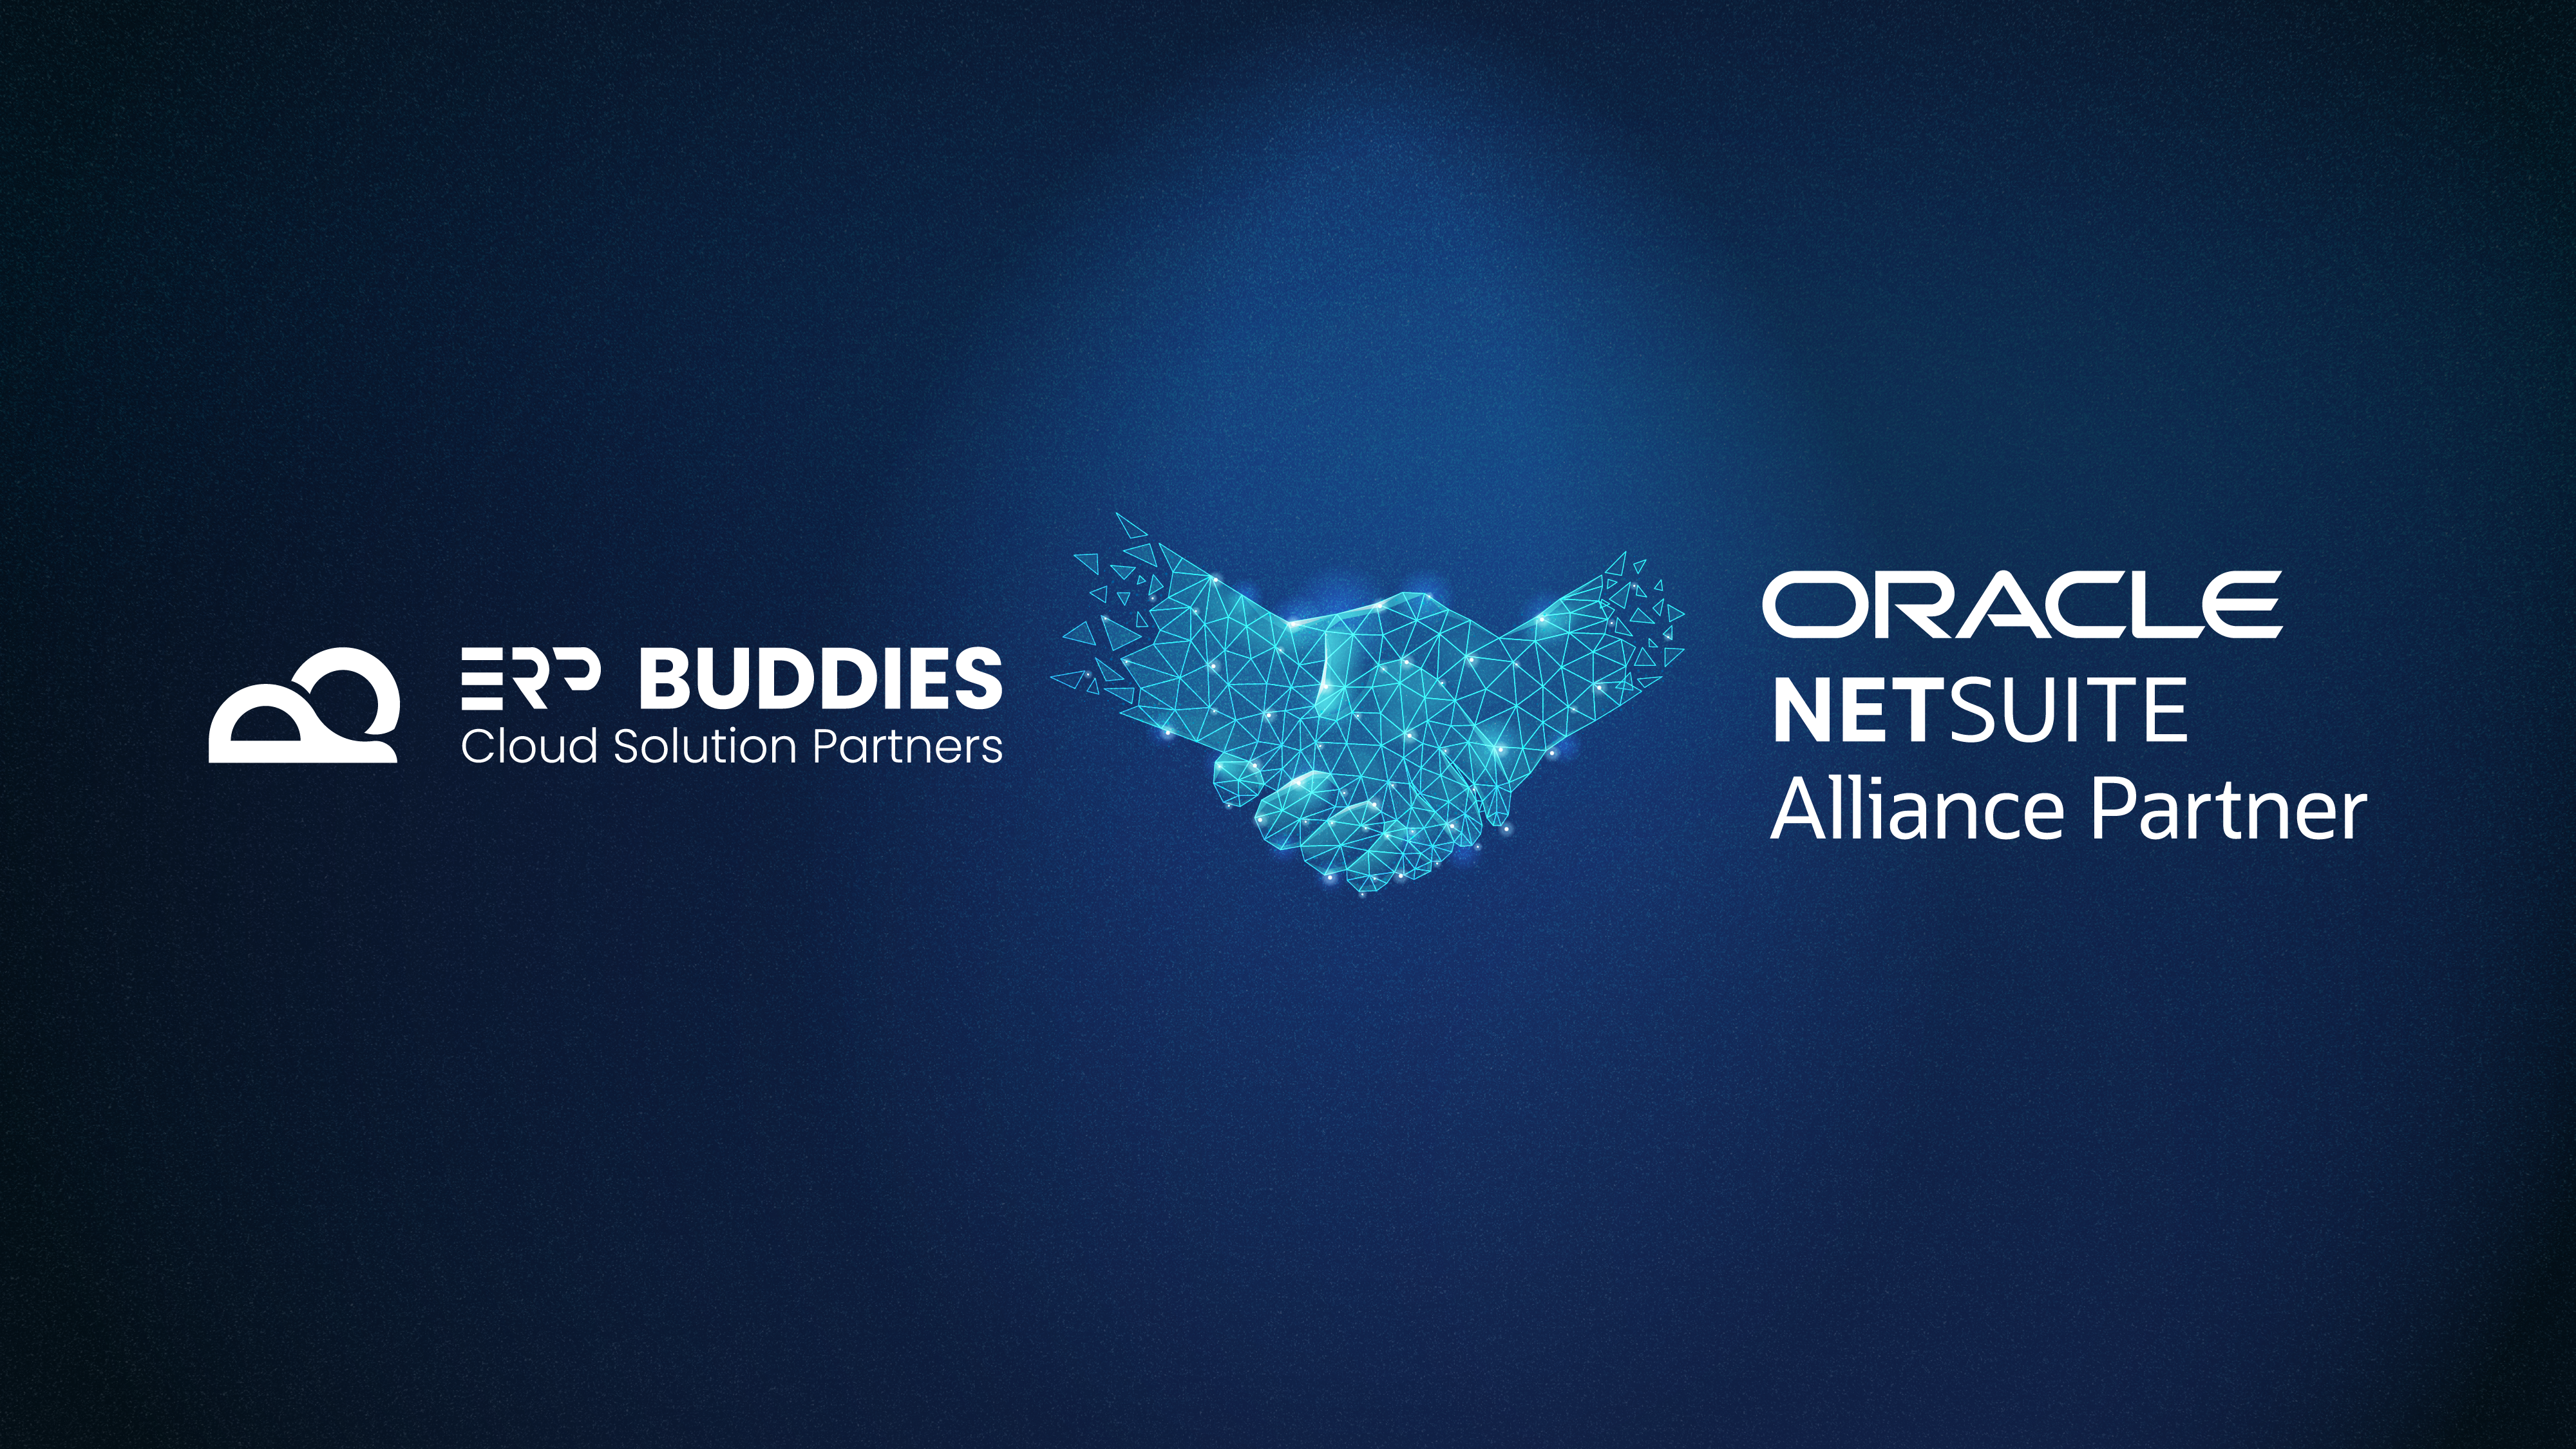 Oracle NetSuite Alliance Partnership